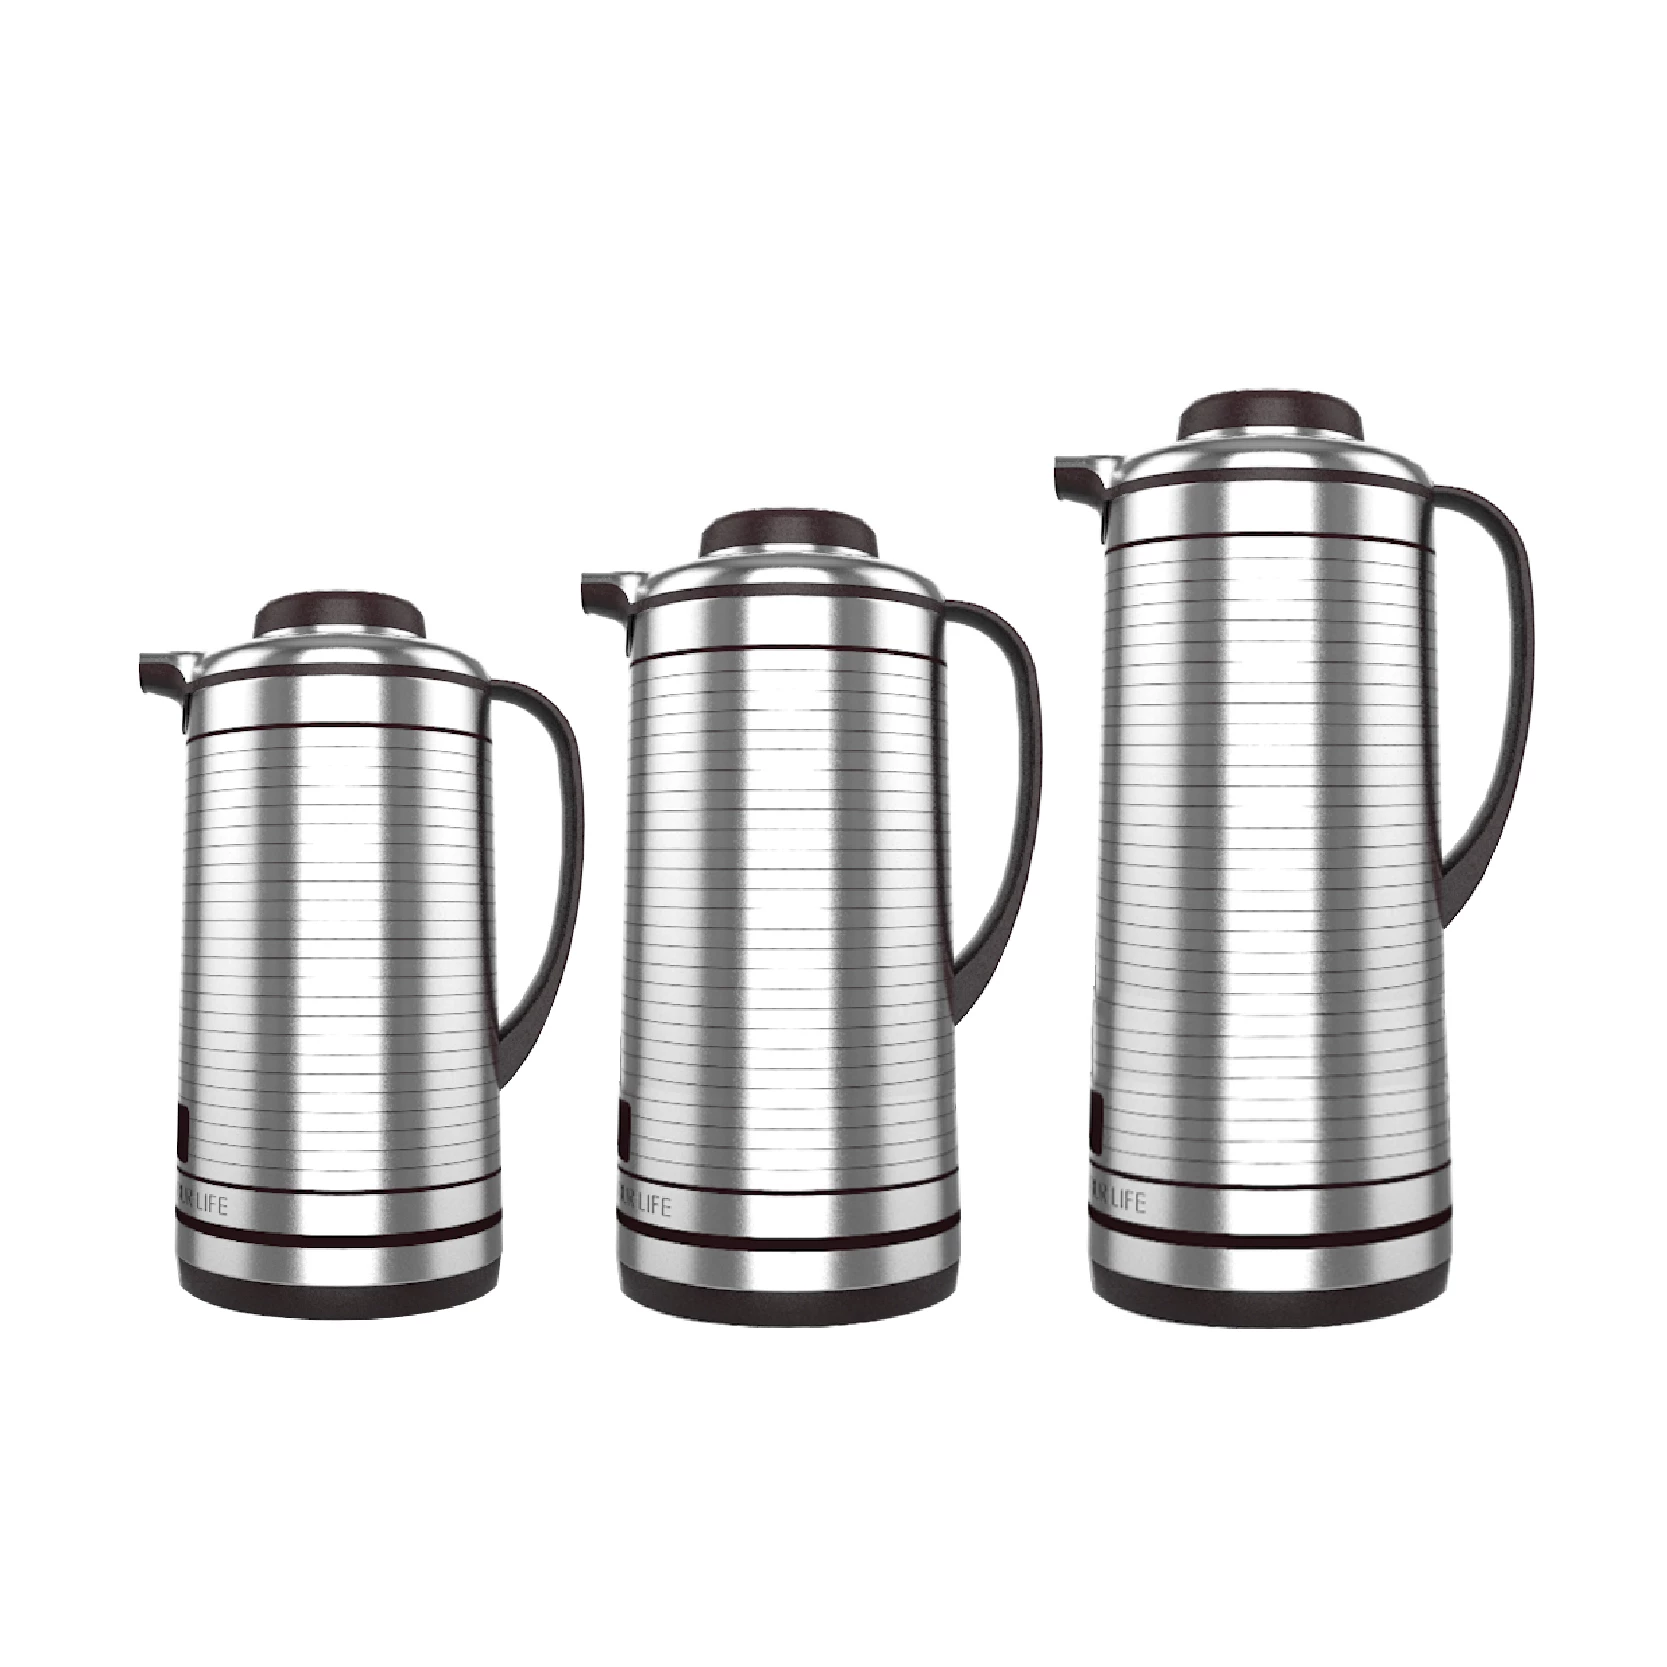 https://vacuumflask.rangdong.com.vn/static/Coffee-series-6/av1.jpg